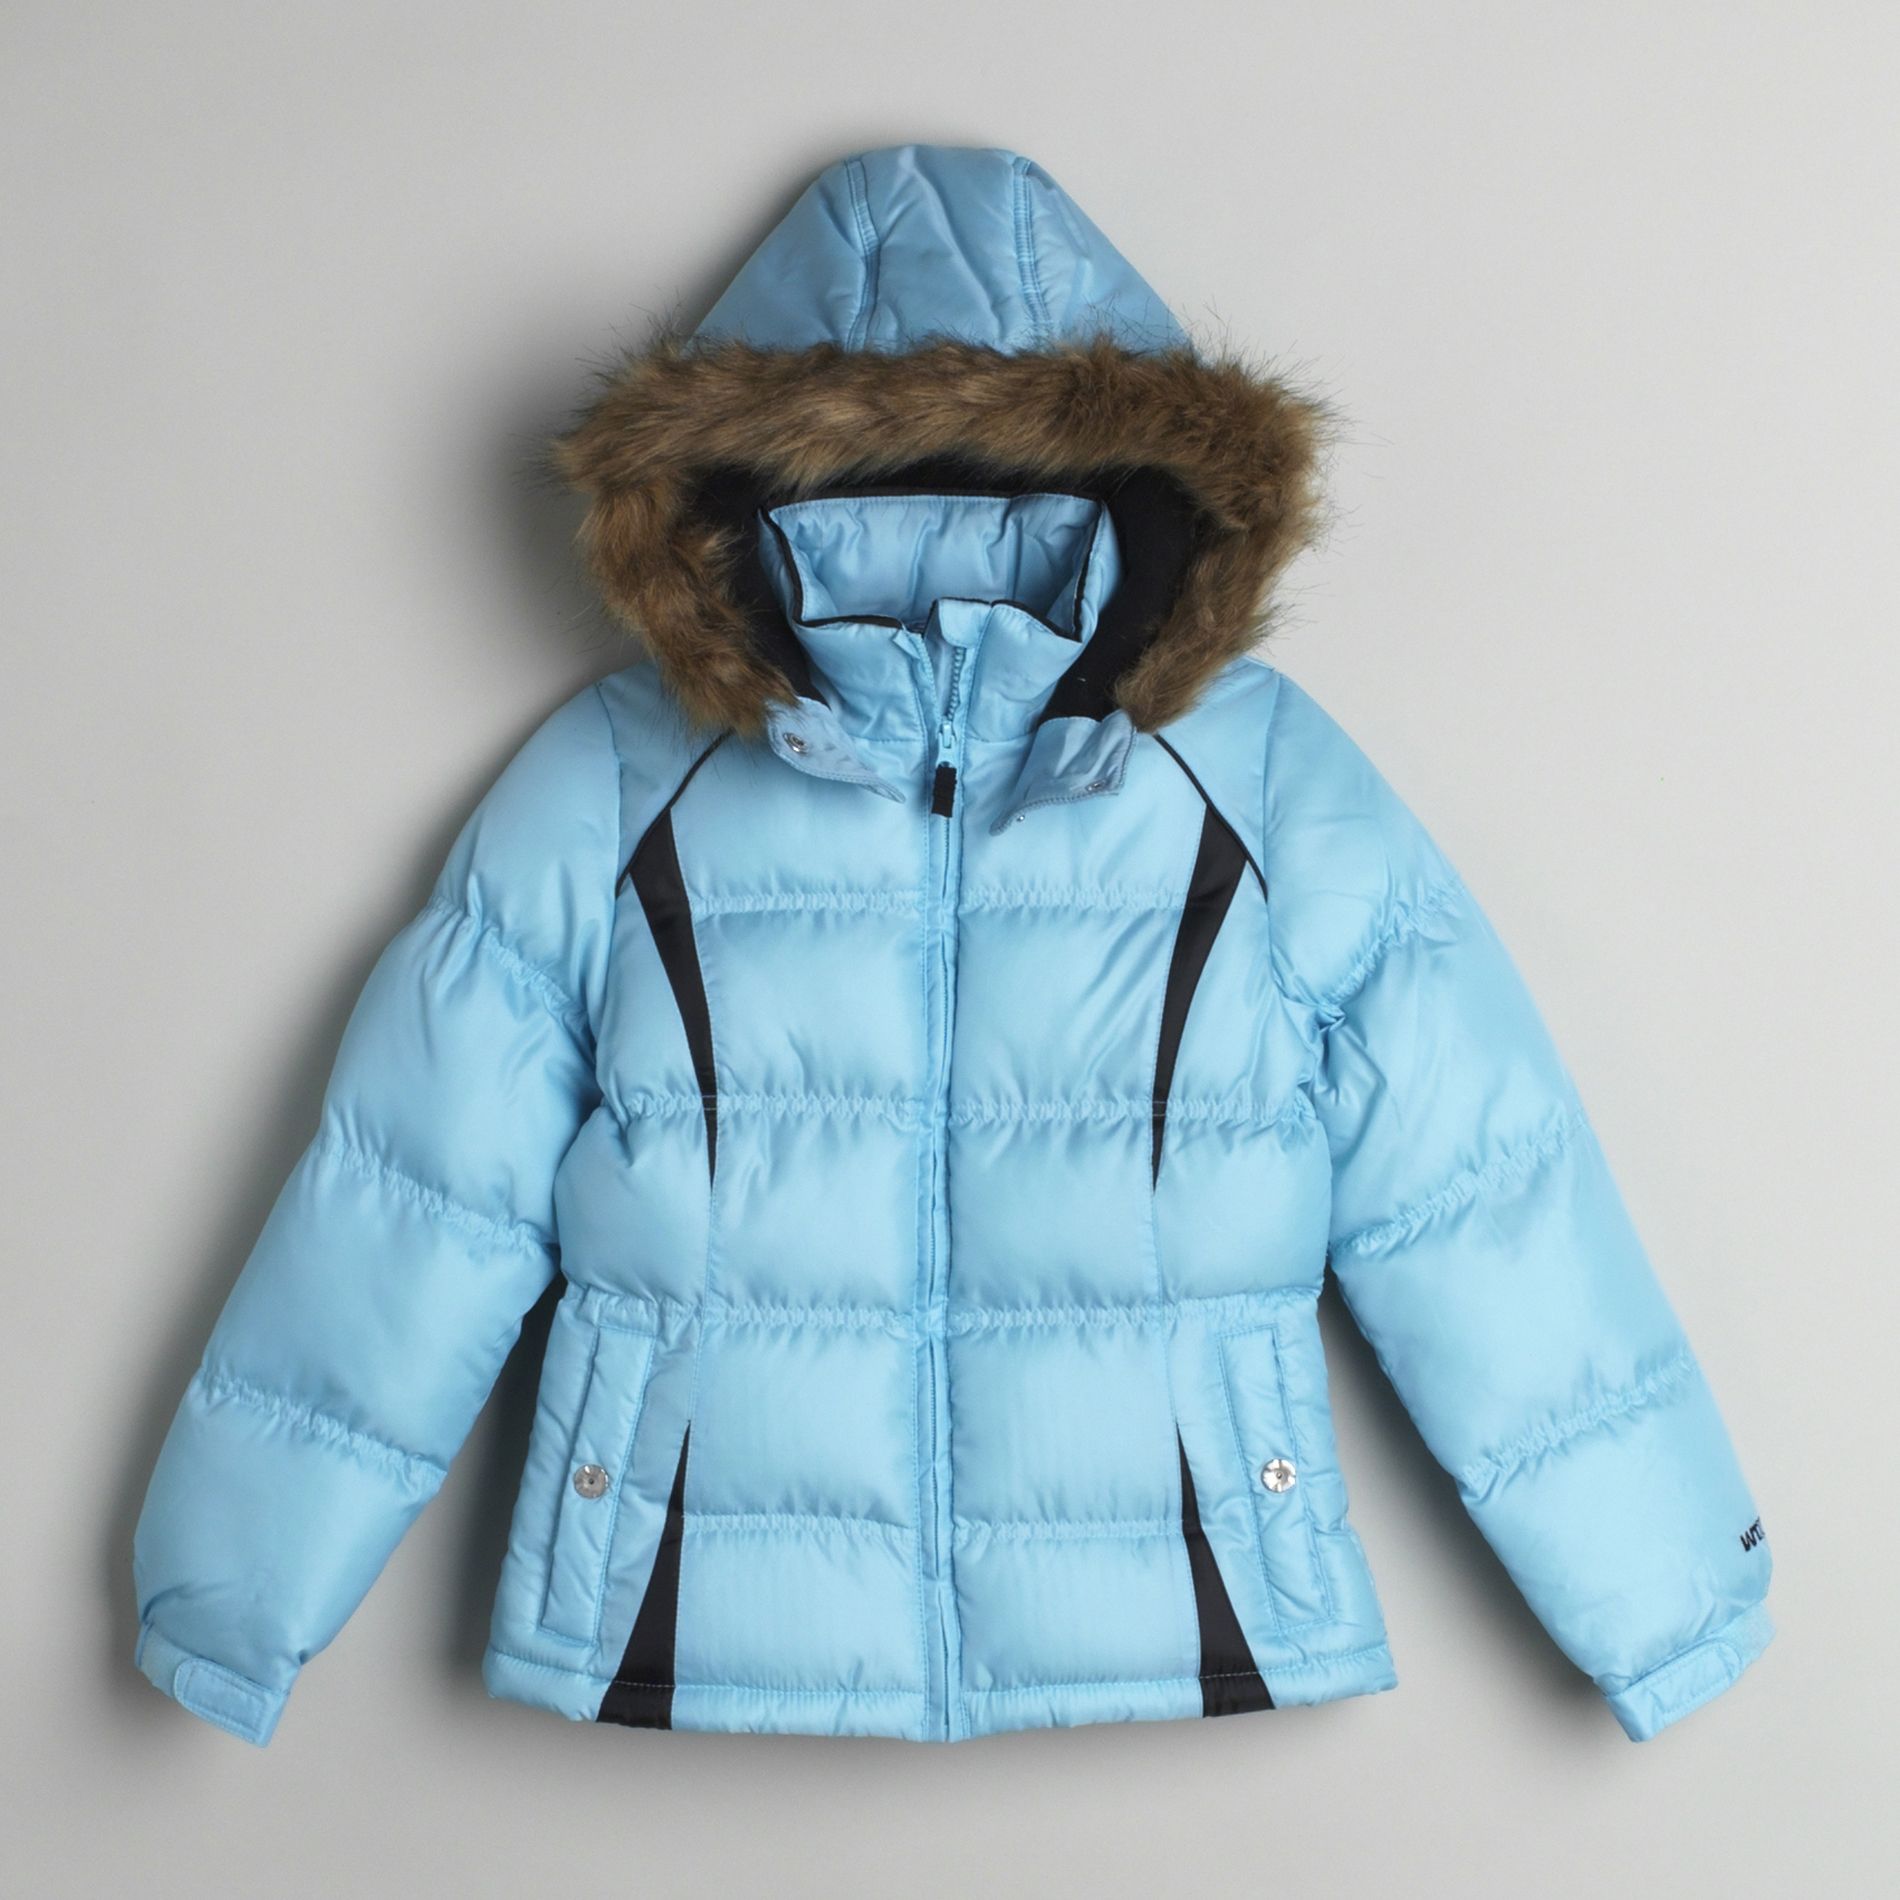 Weather Tamer Girls' Winter Jacket